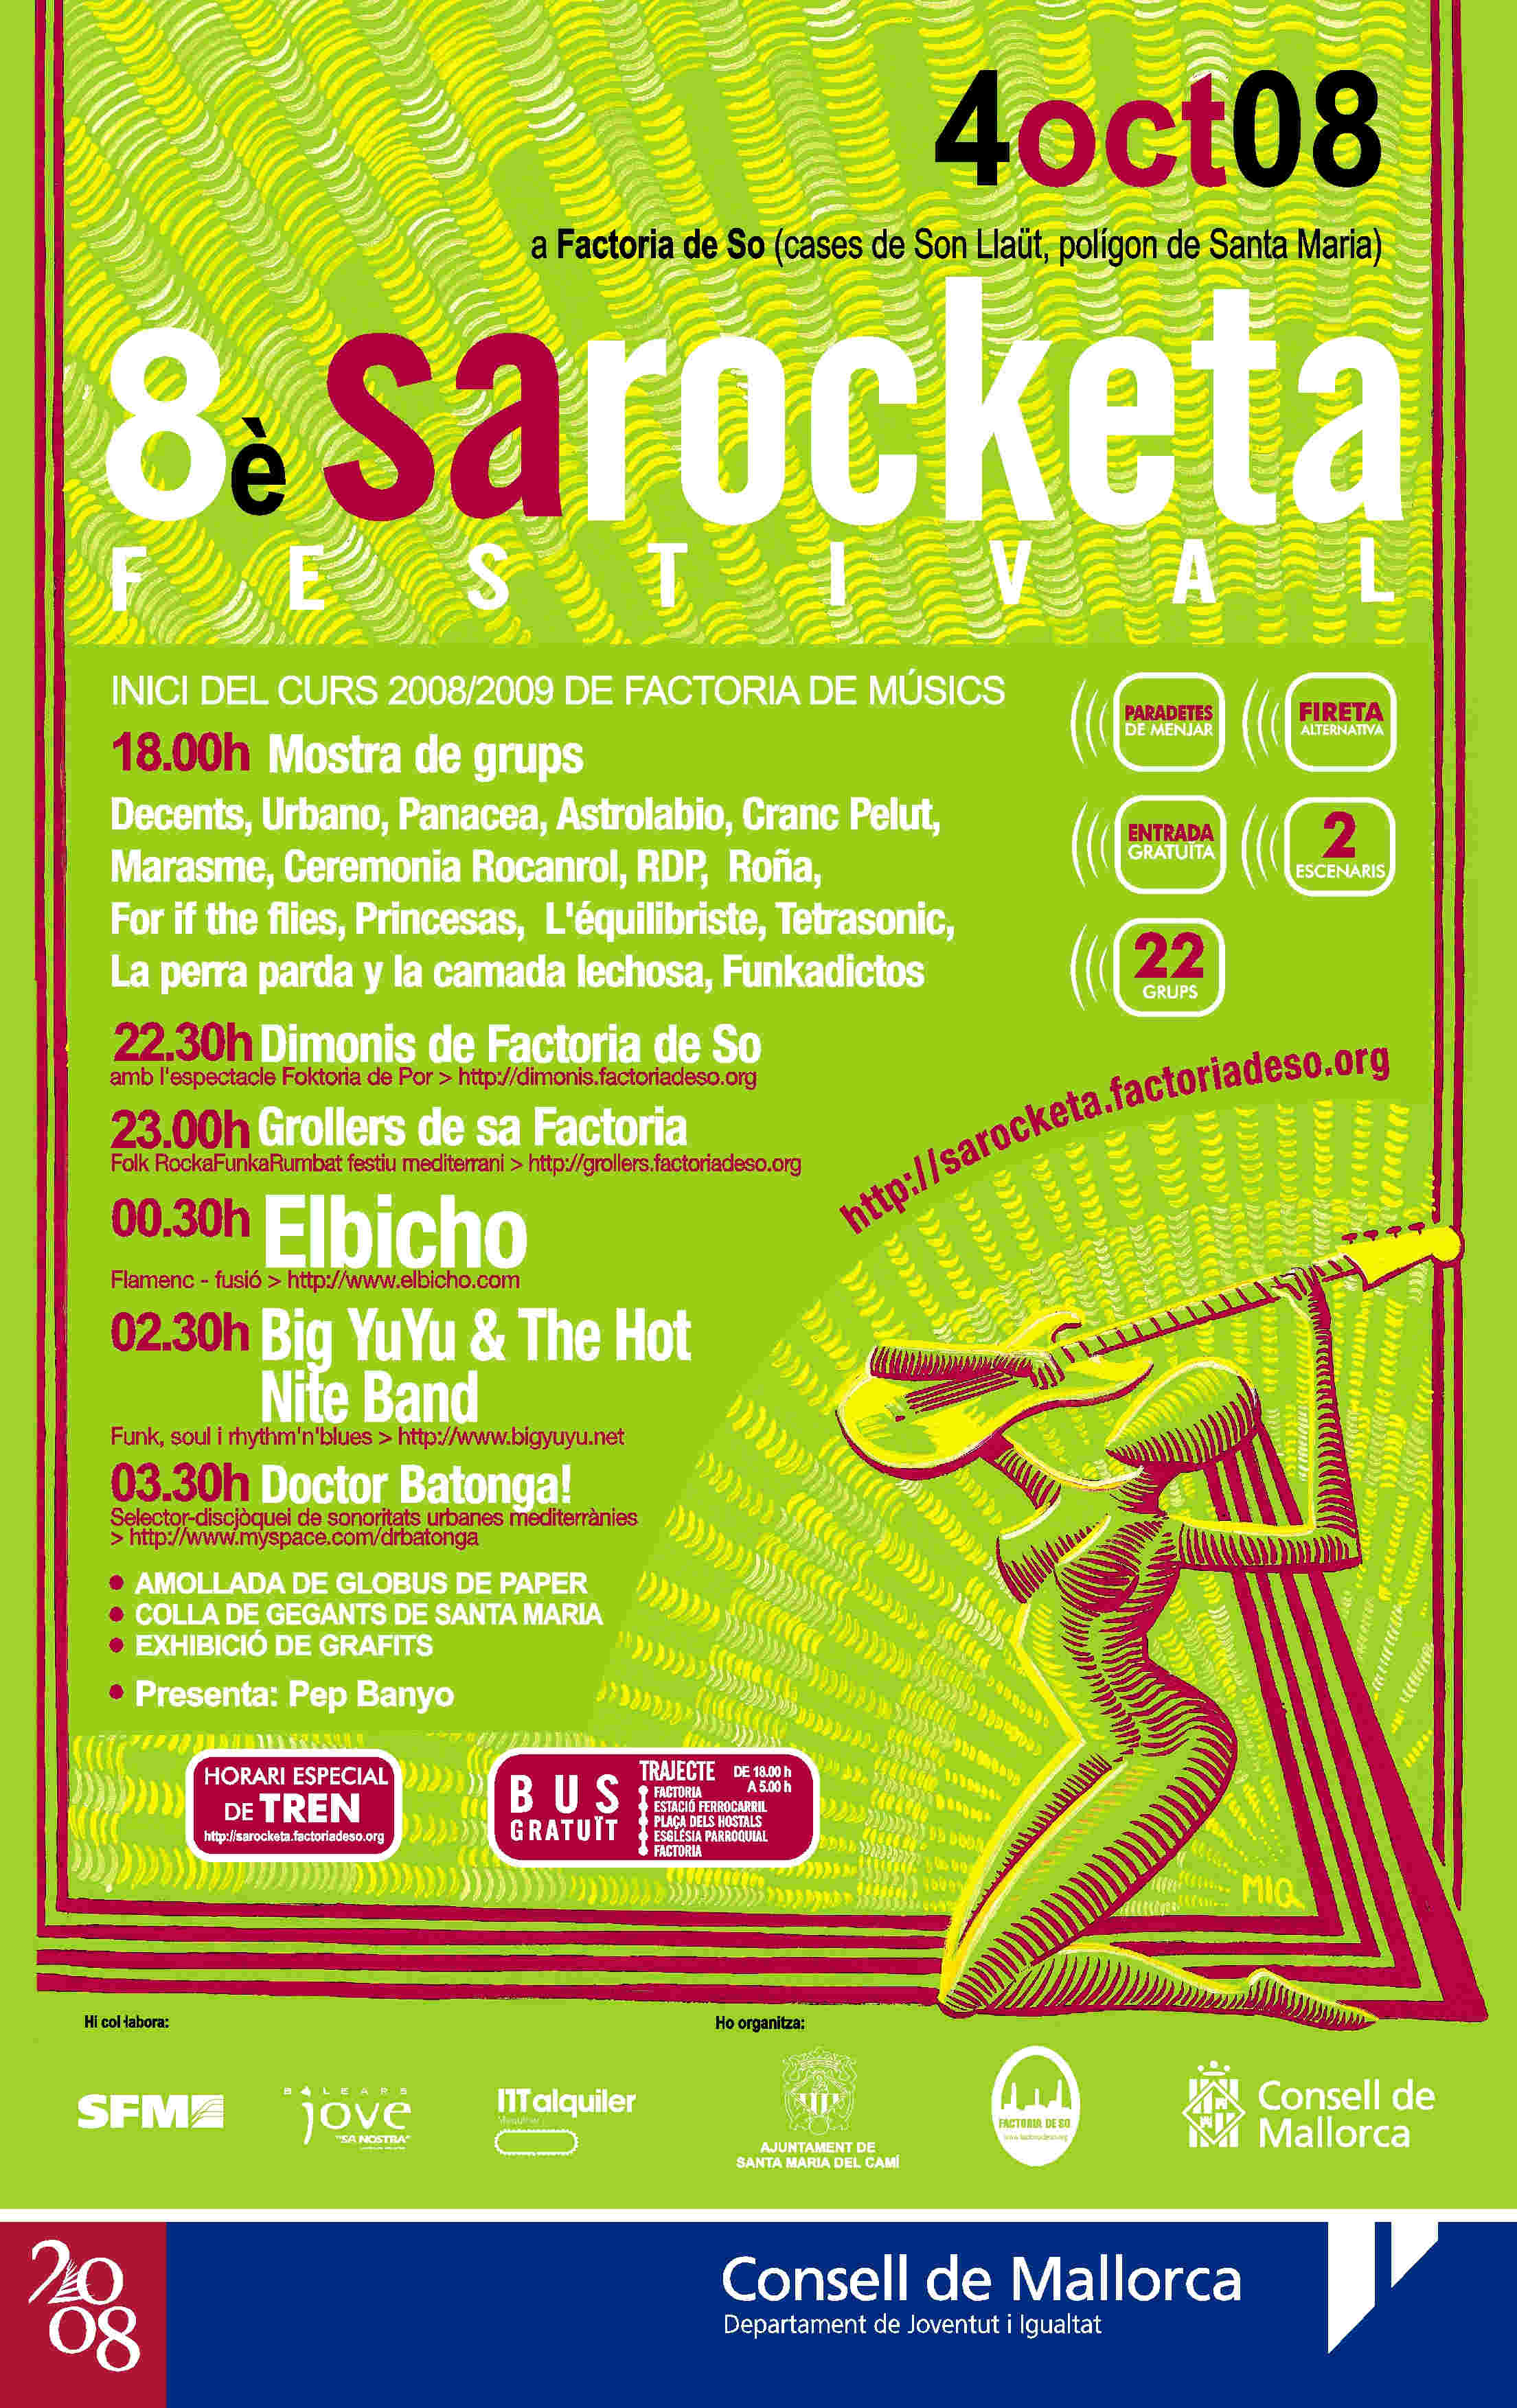 SaRocketaFestival2008